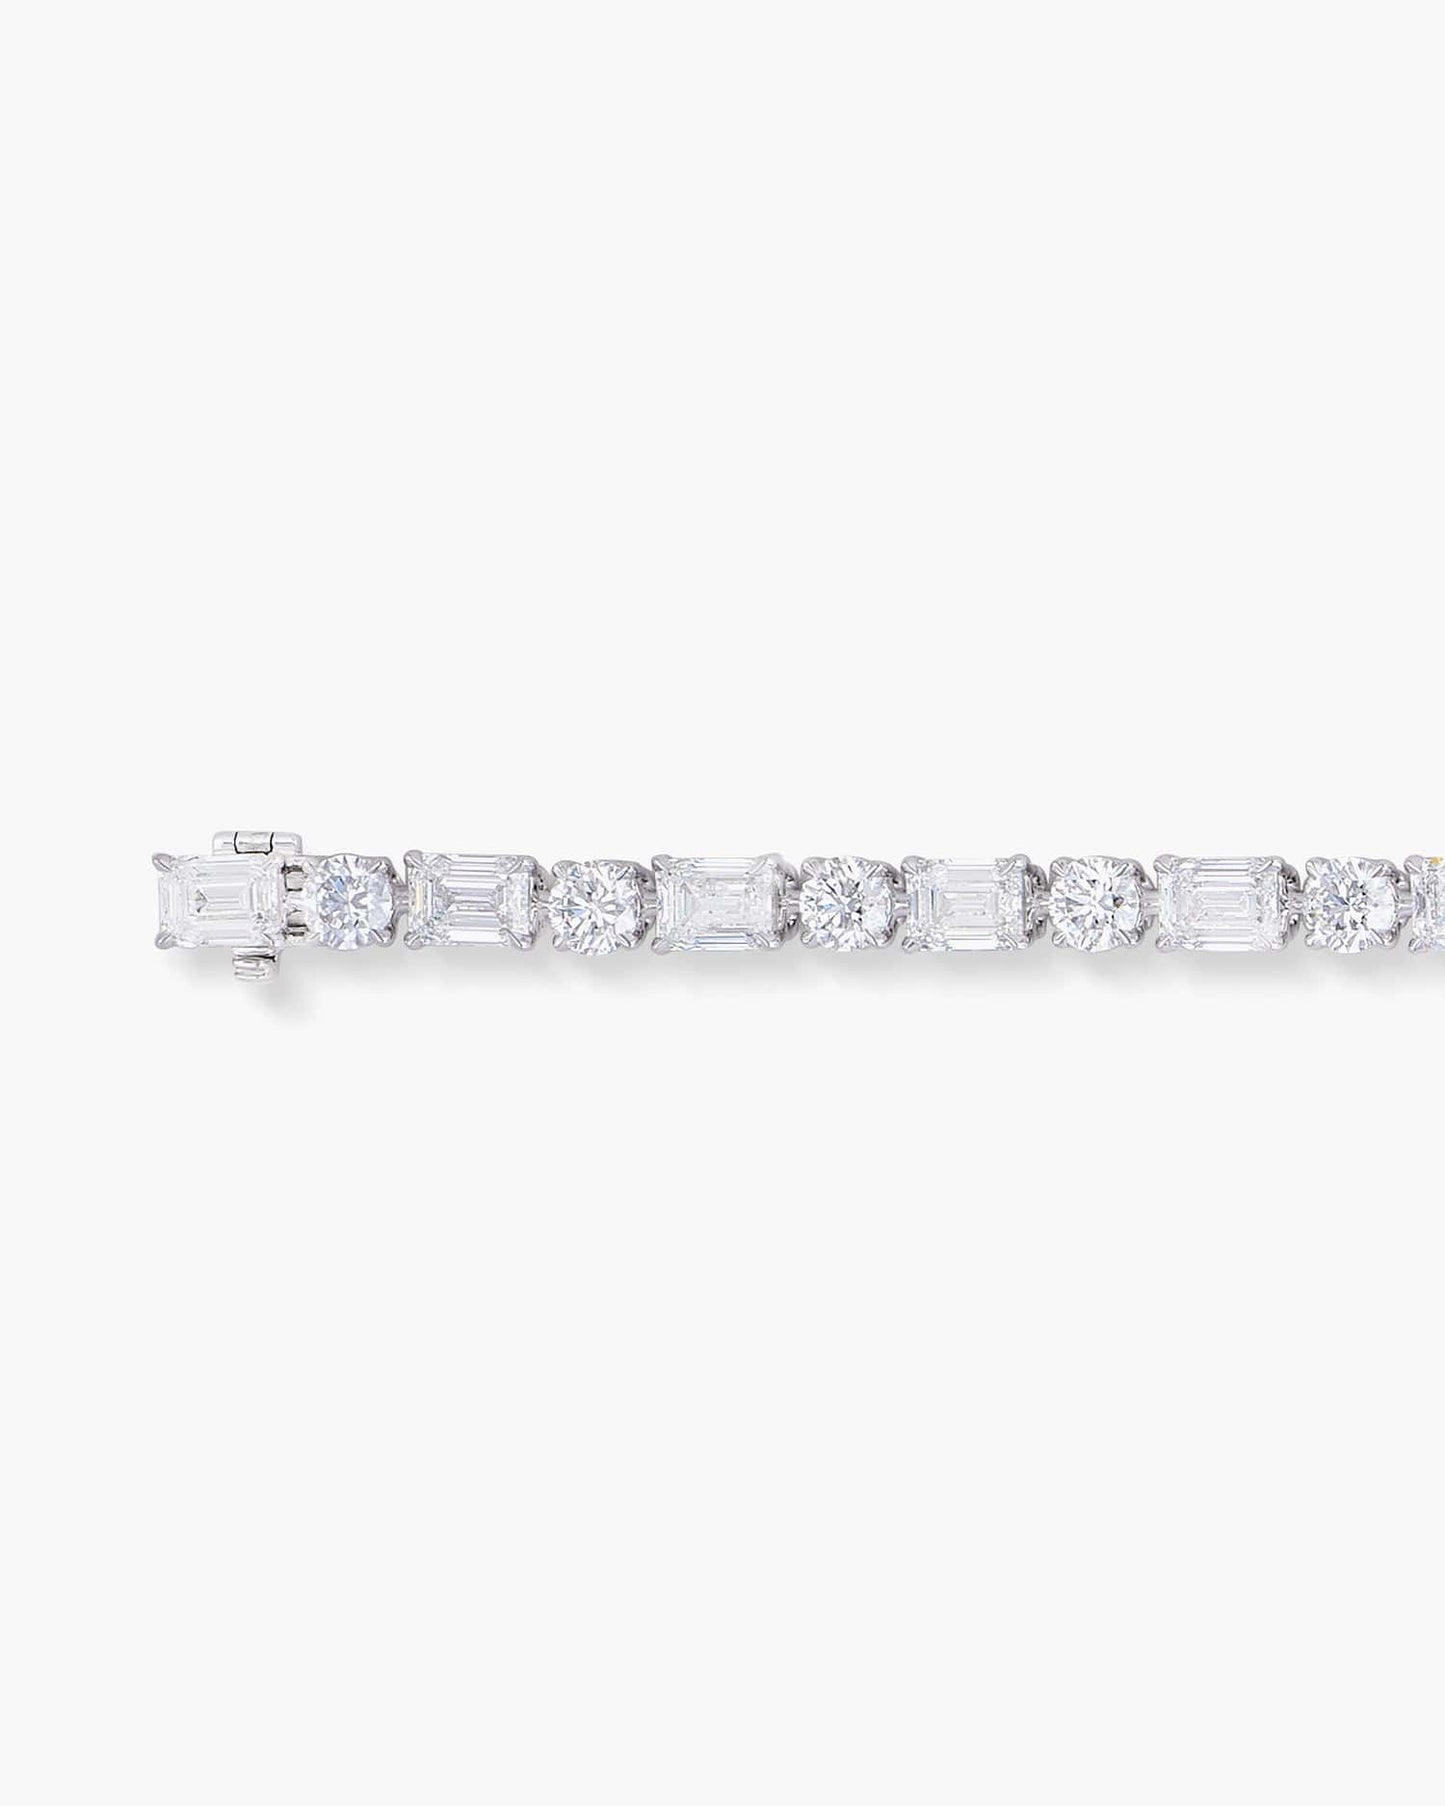 Emerald Cut and Round Brilliant Cut Diamond Bracelet (0.50 carat)